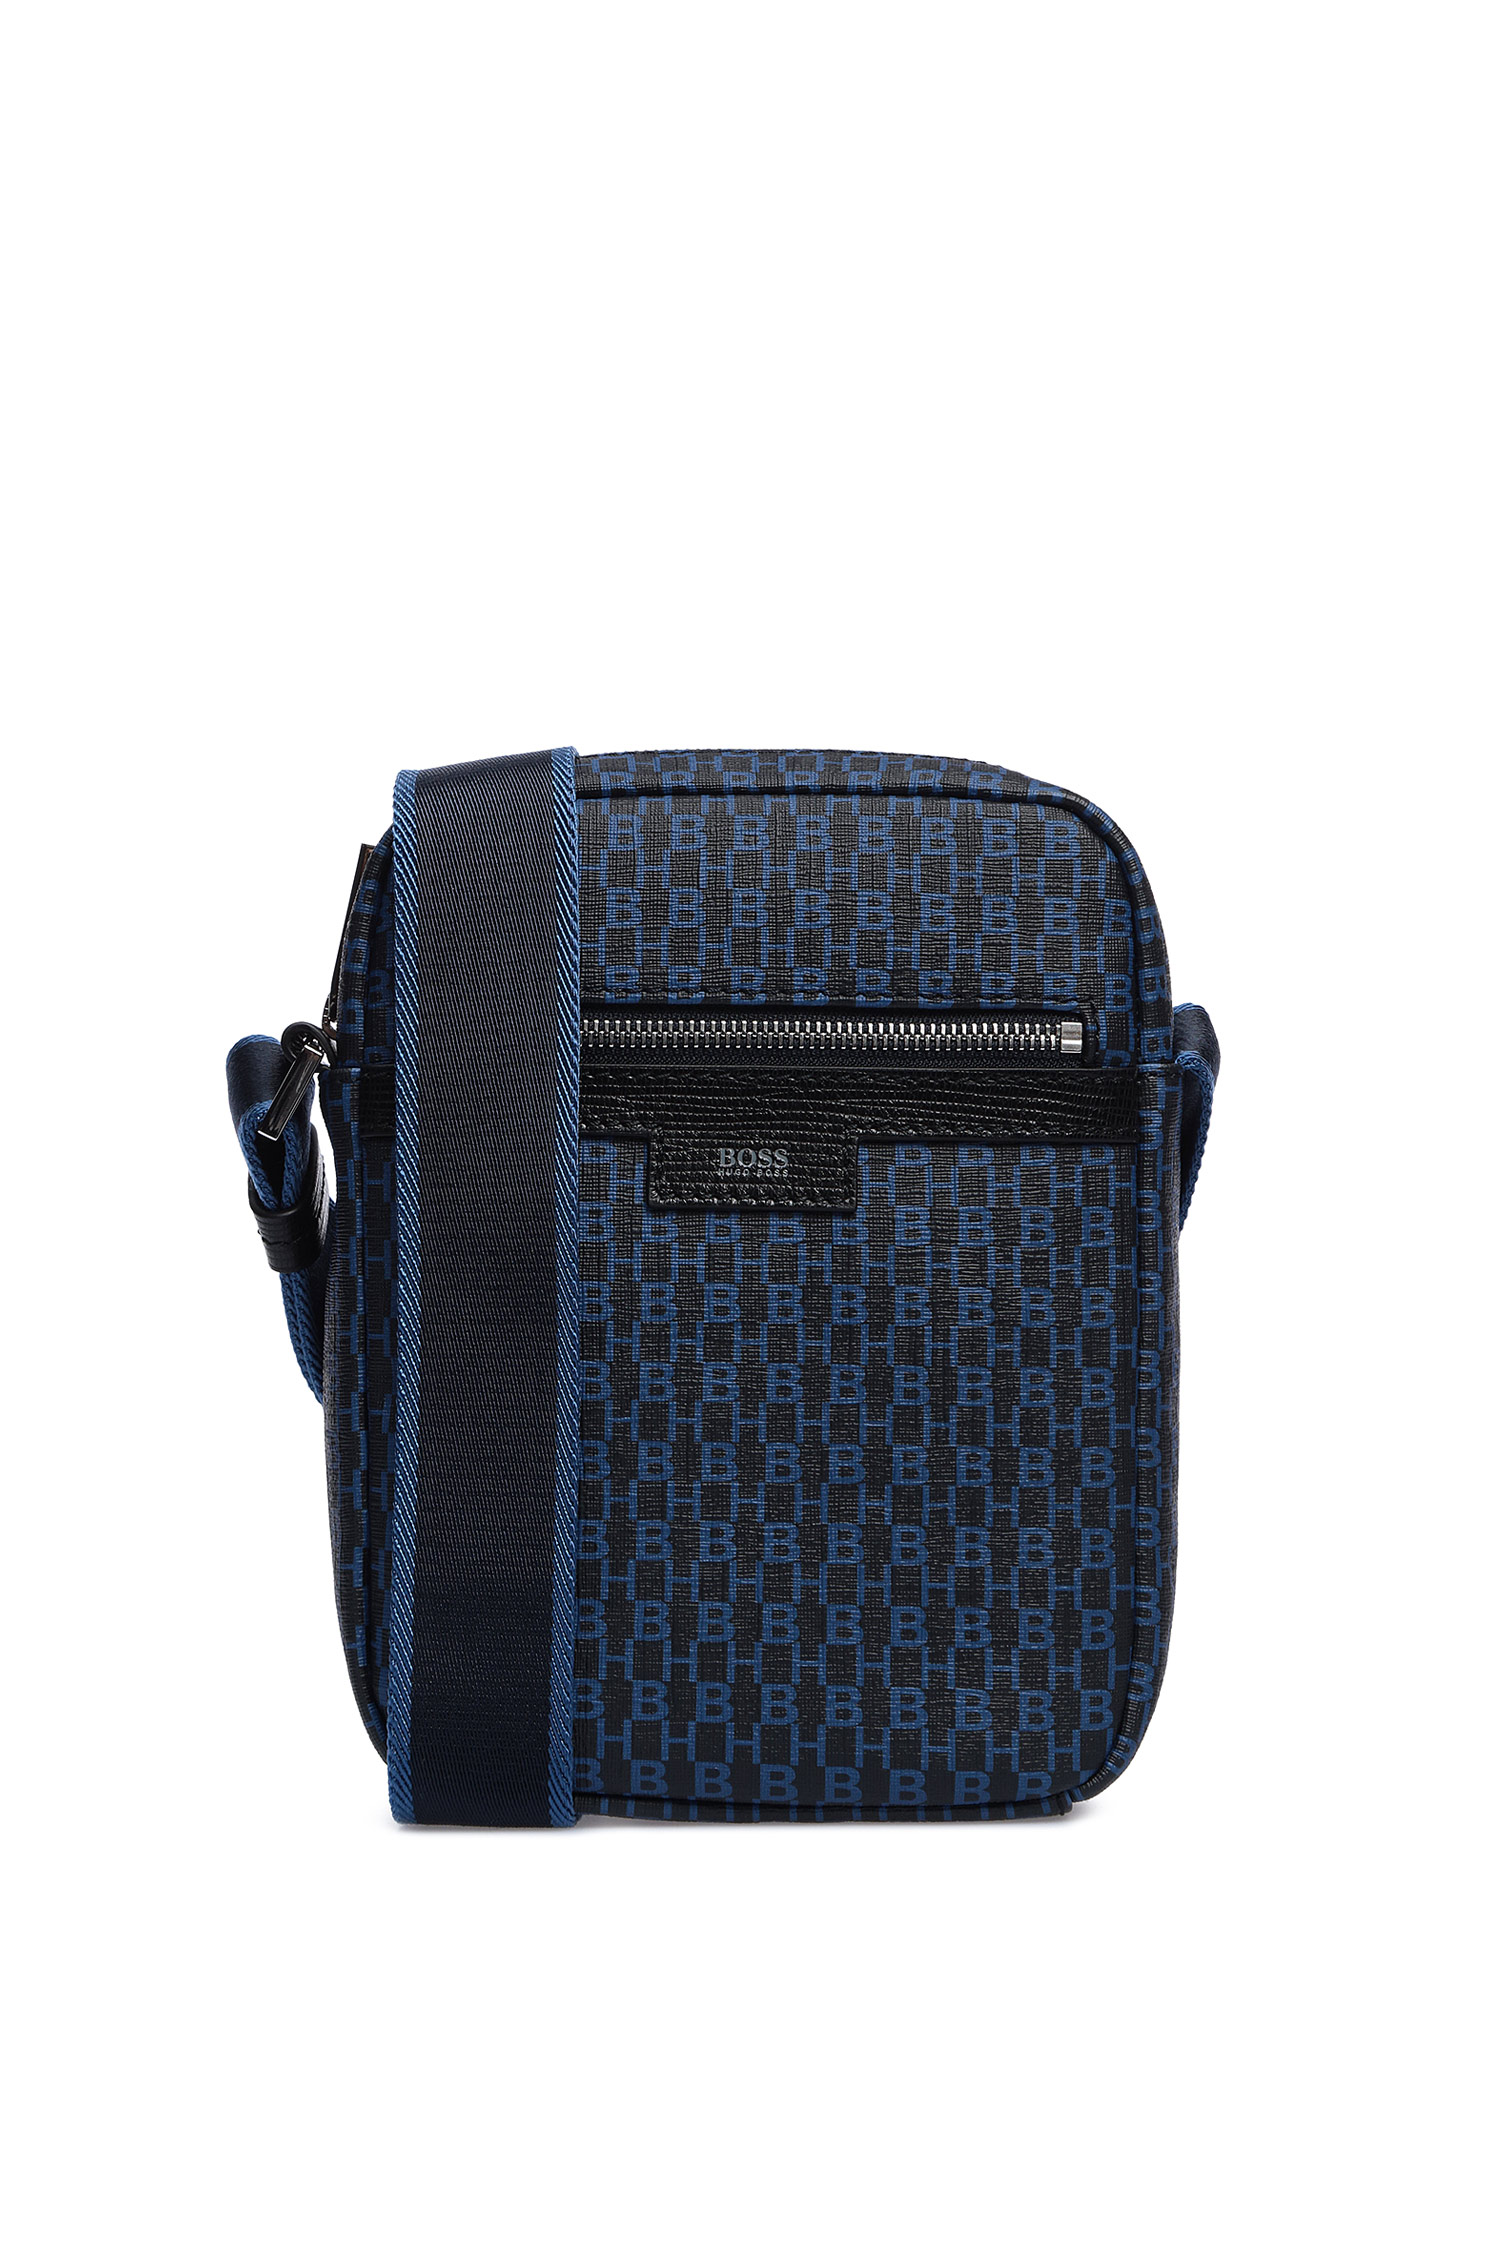 Мужская синяя сумка через плечо BOSS 50419019;409